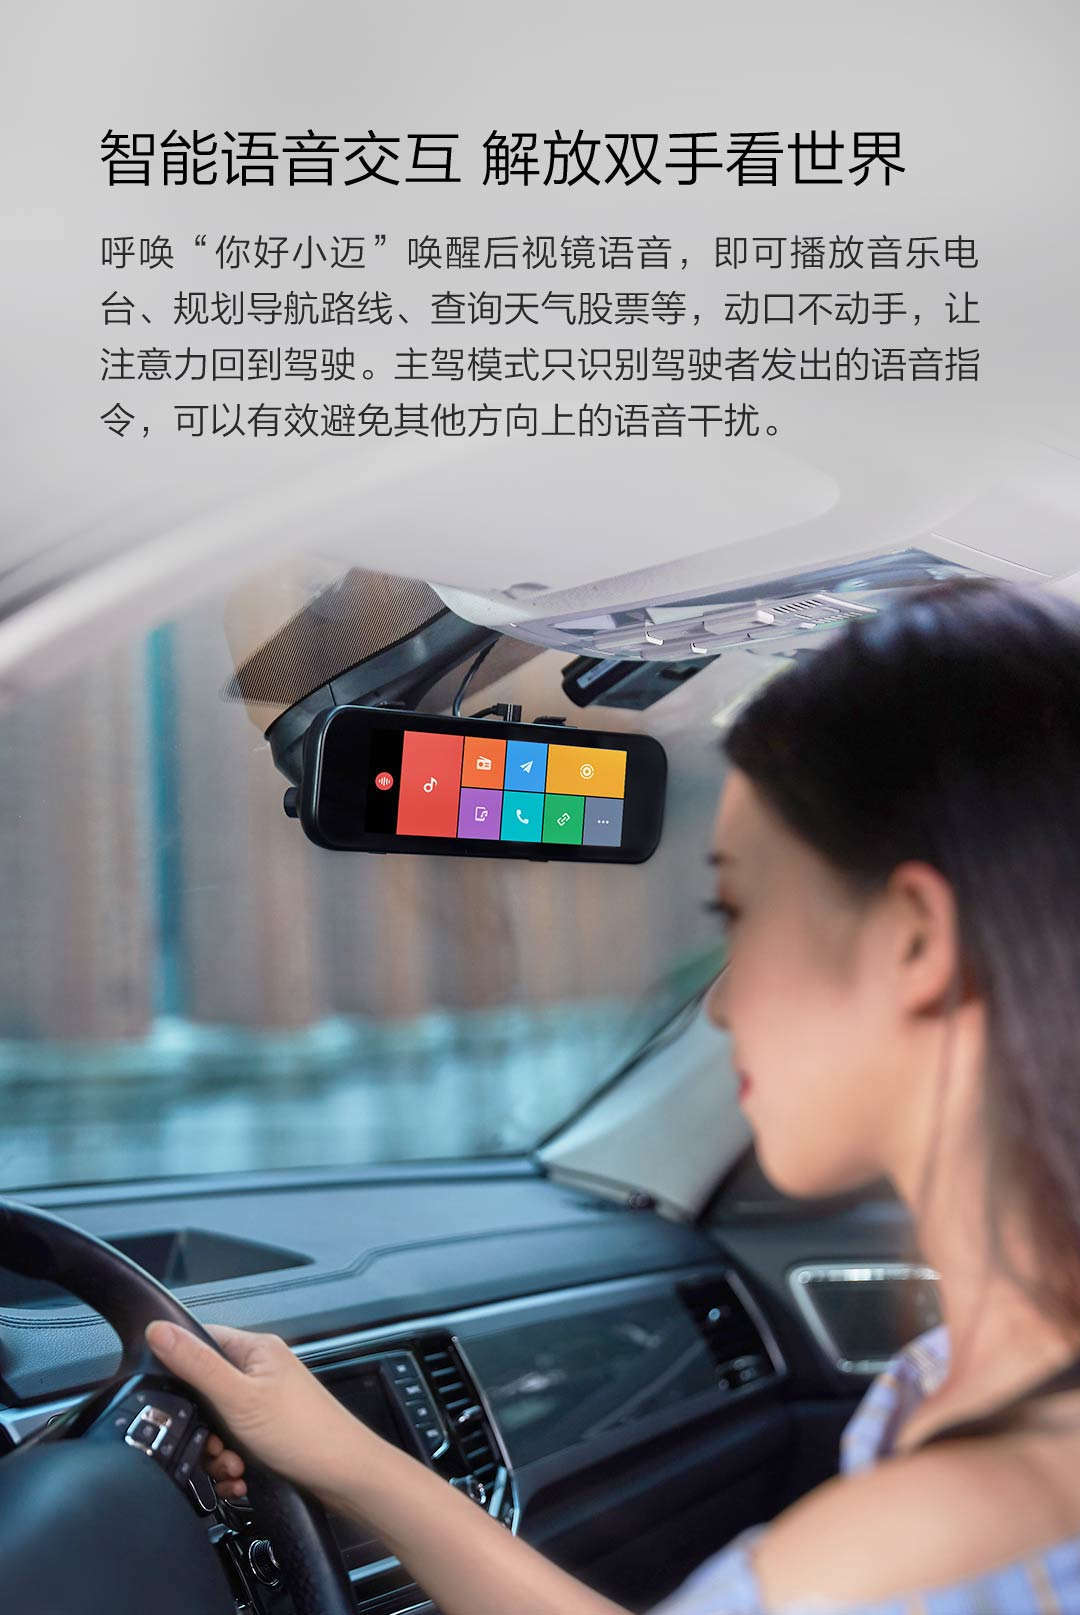 Xiaomi Mijia Mirror